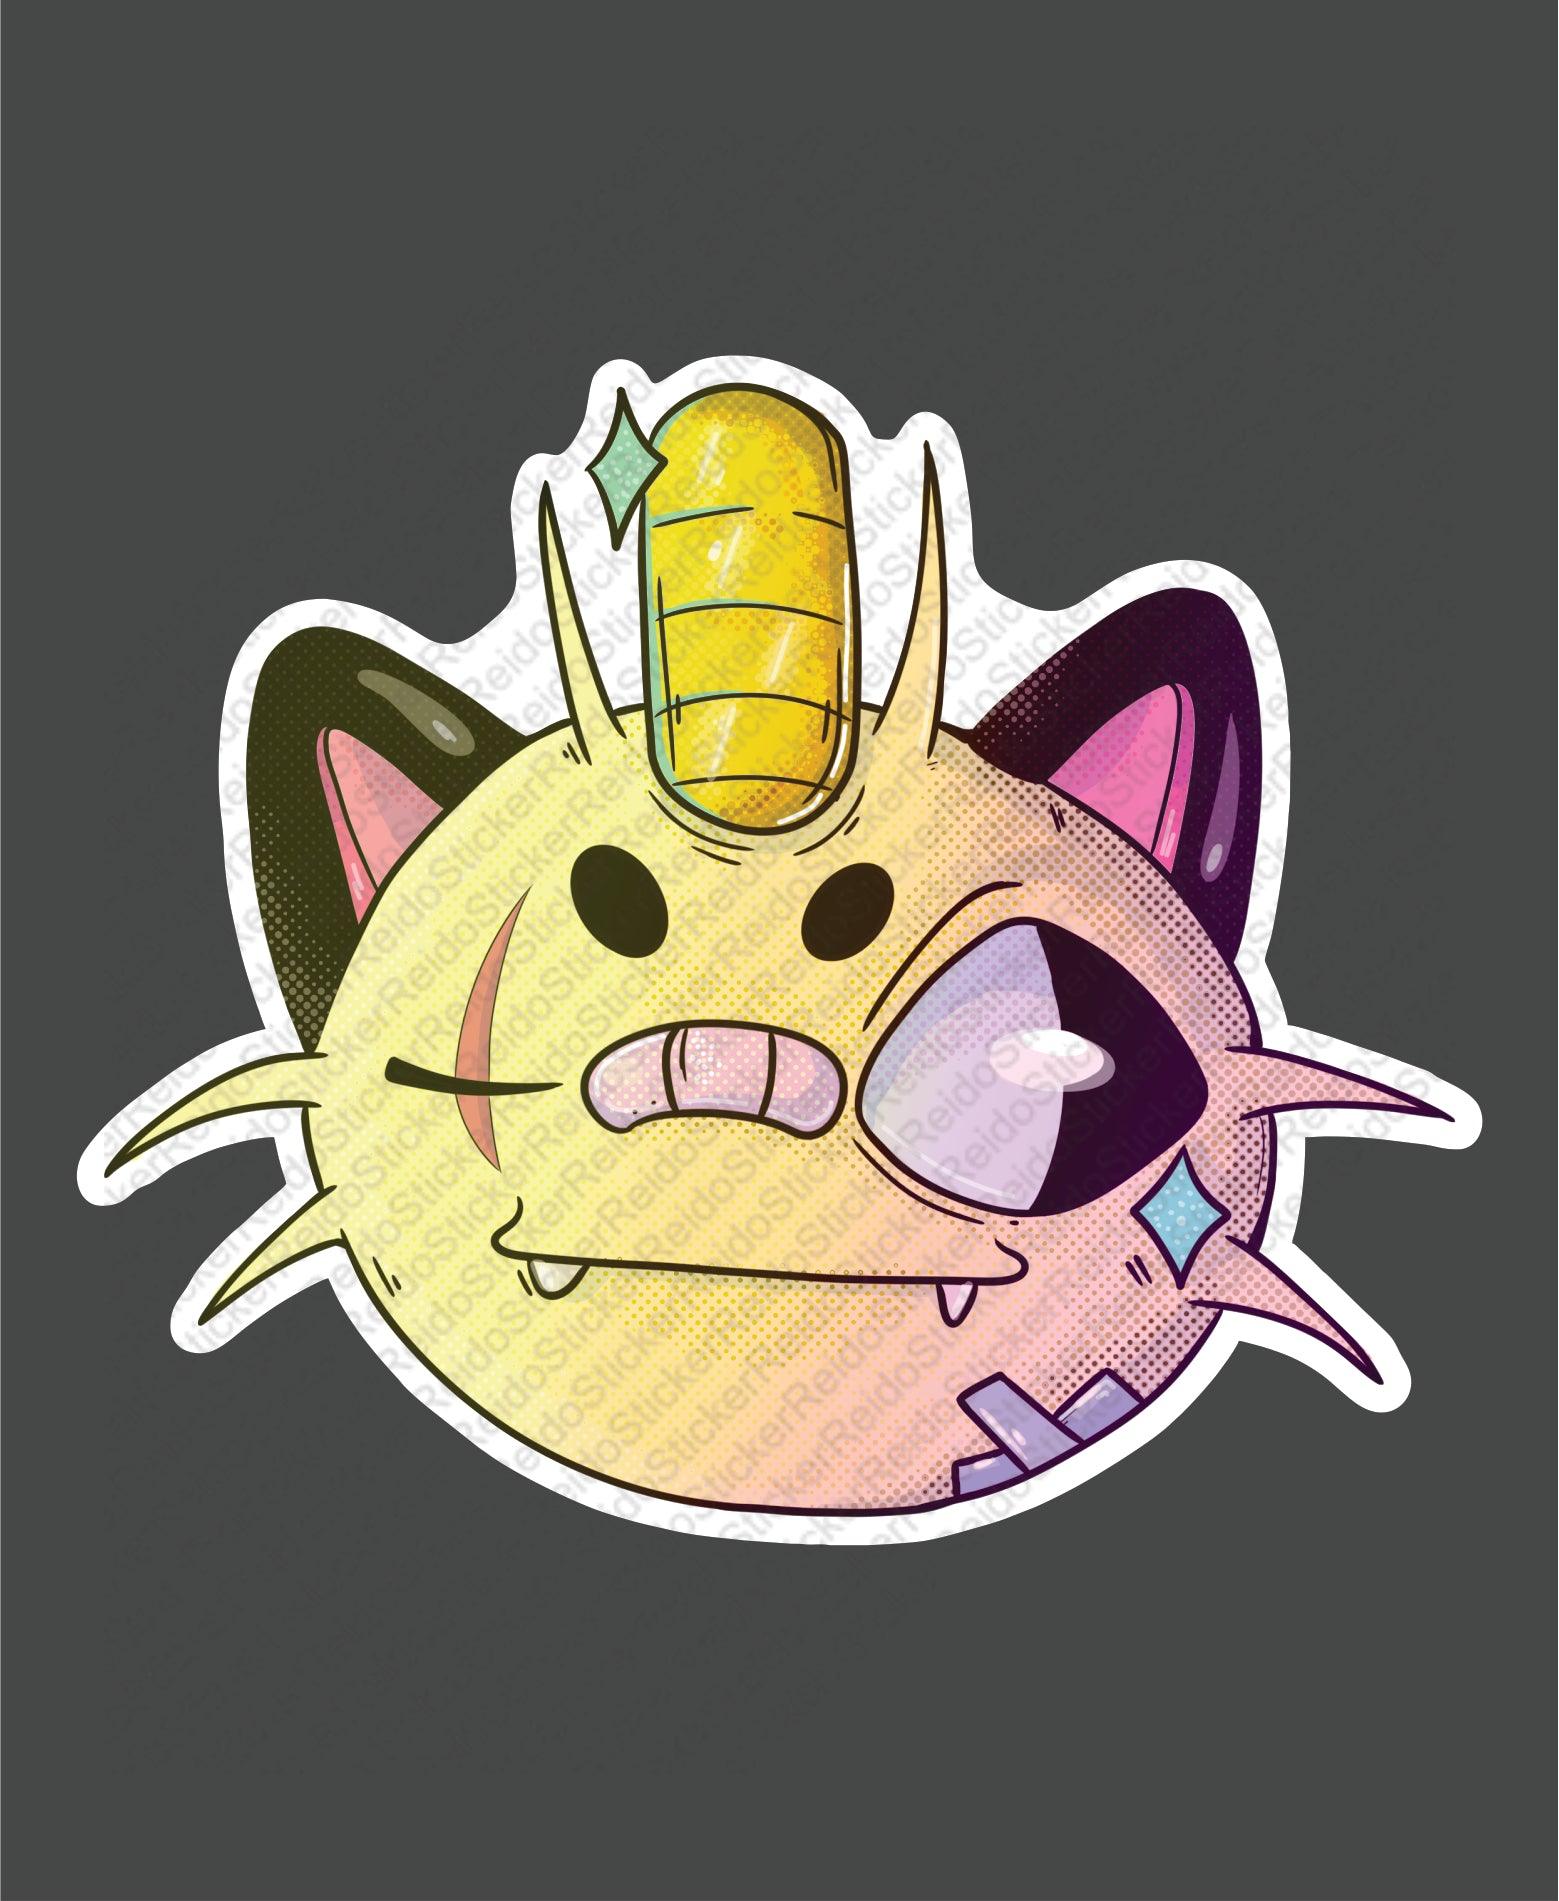 Meowth - Rei do Sticker